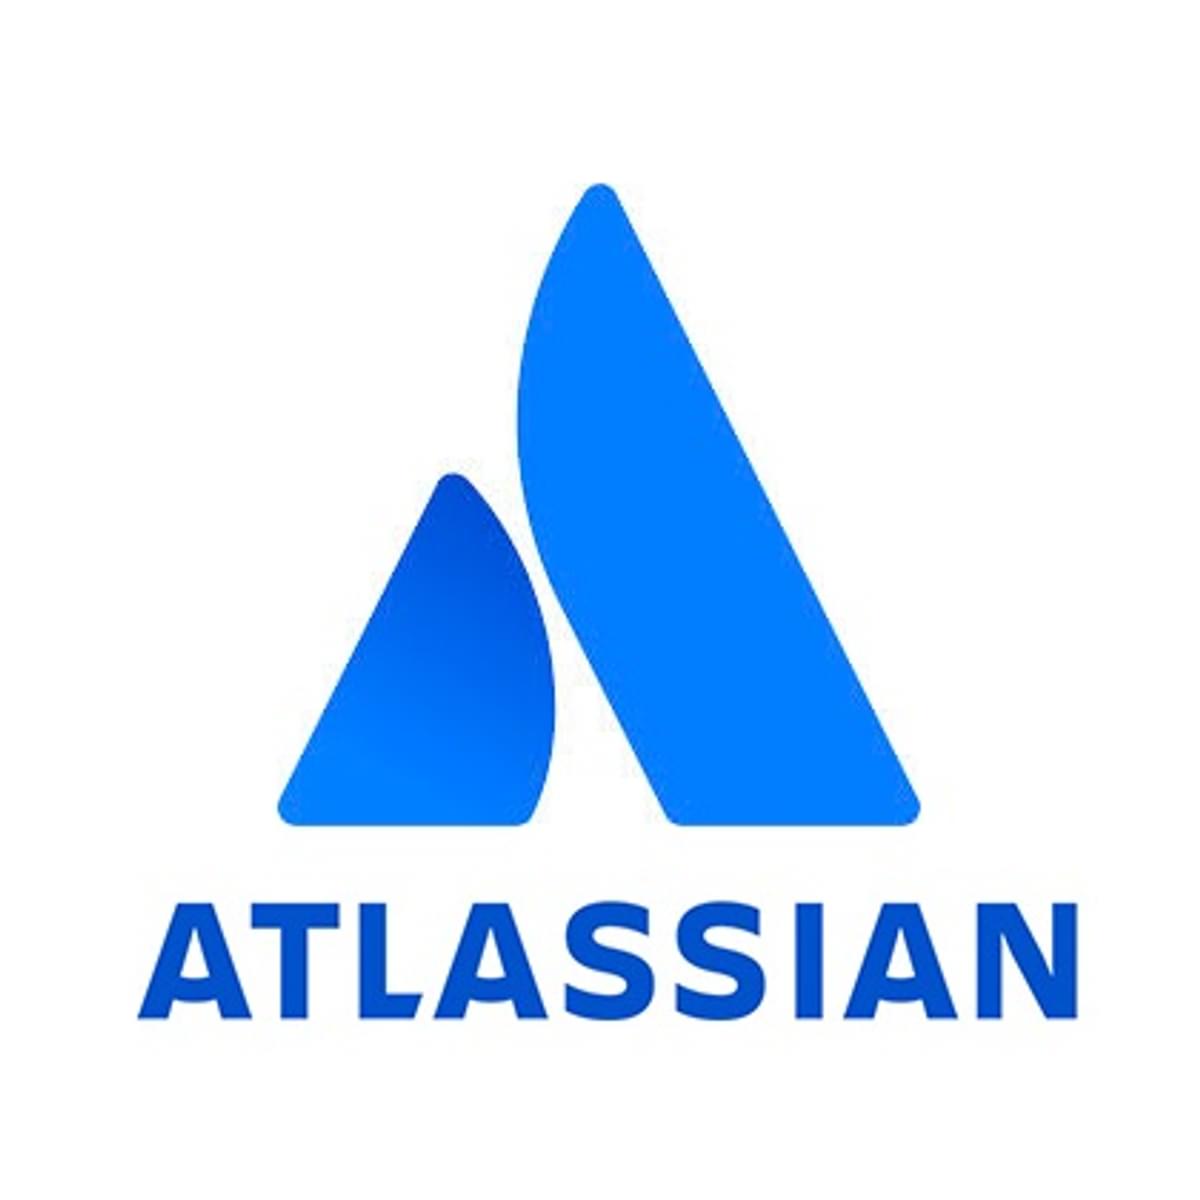 Eficode benoemd tot Atlassian Platinum Solution Partner image